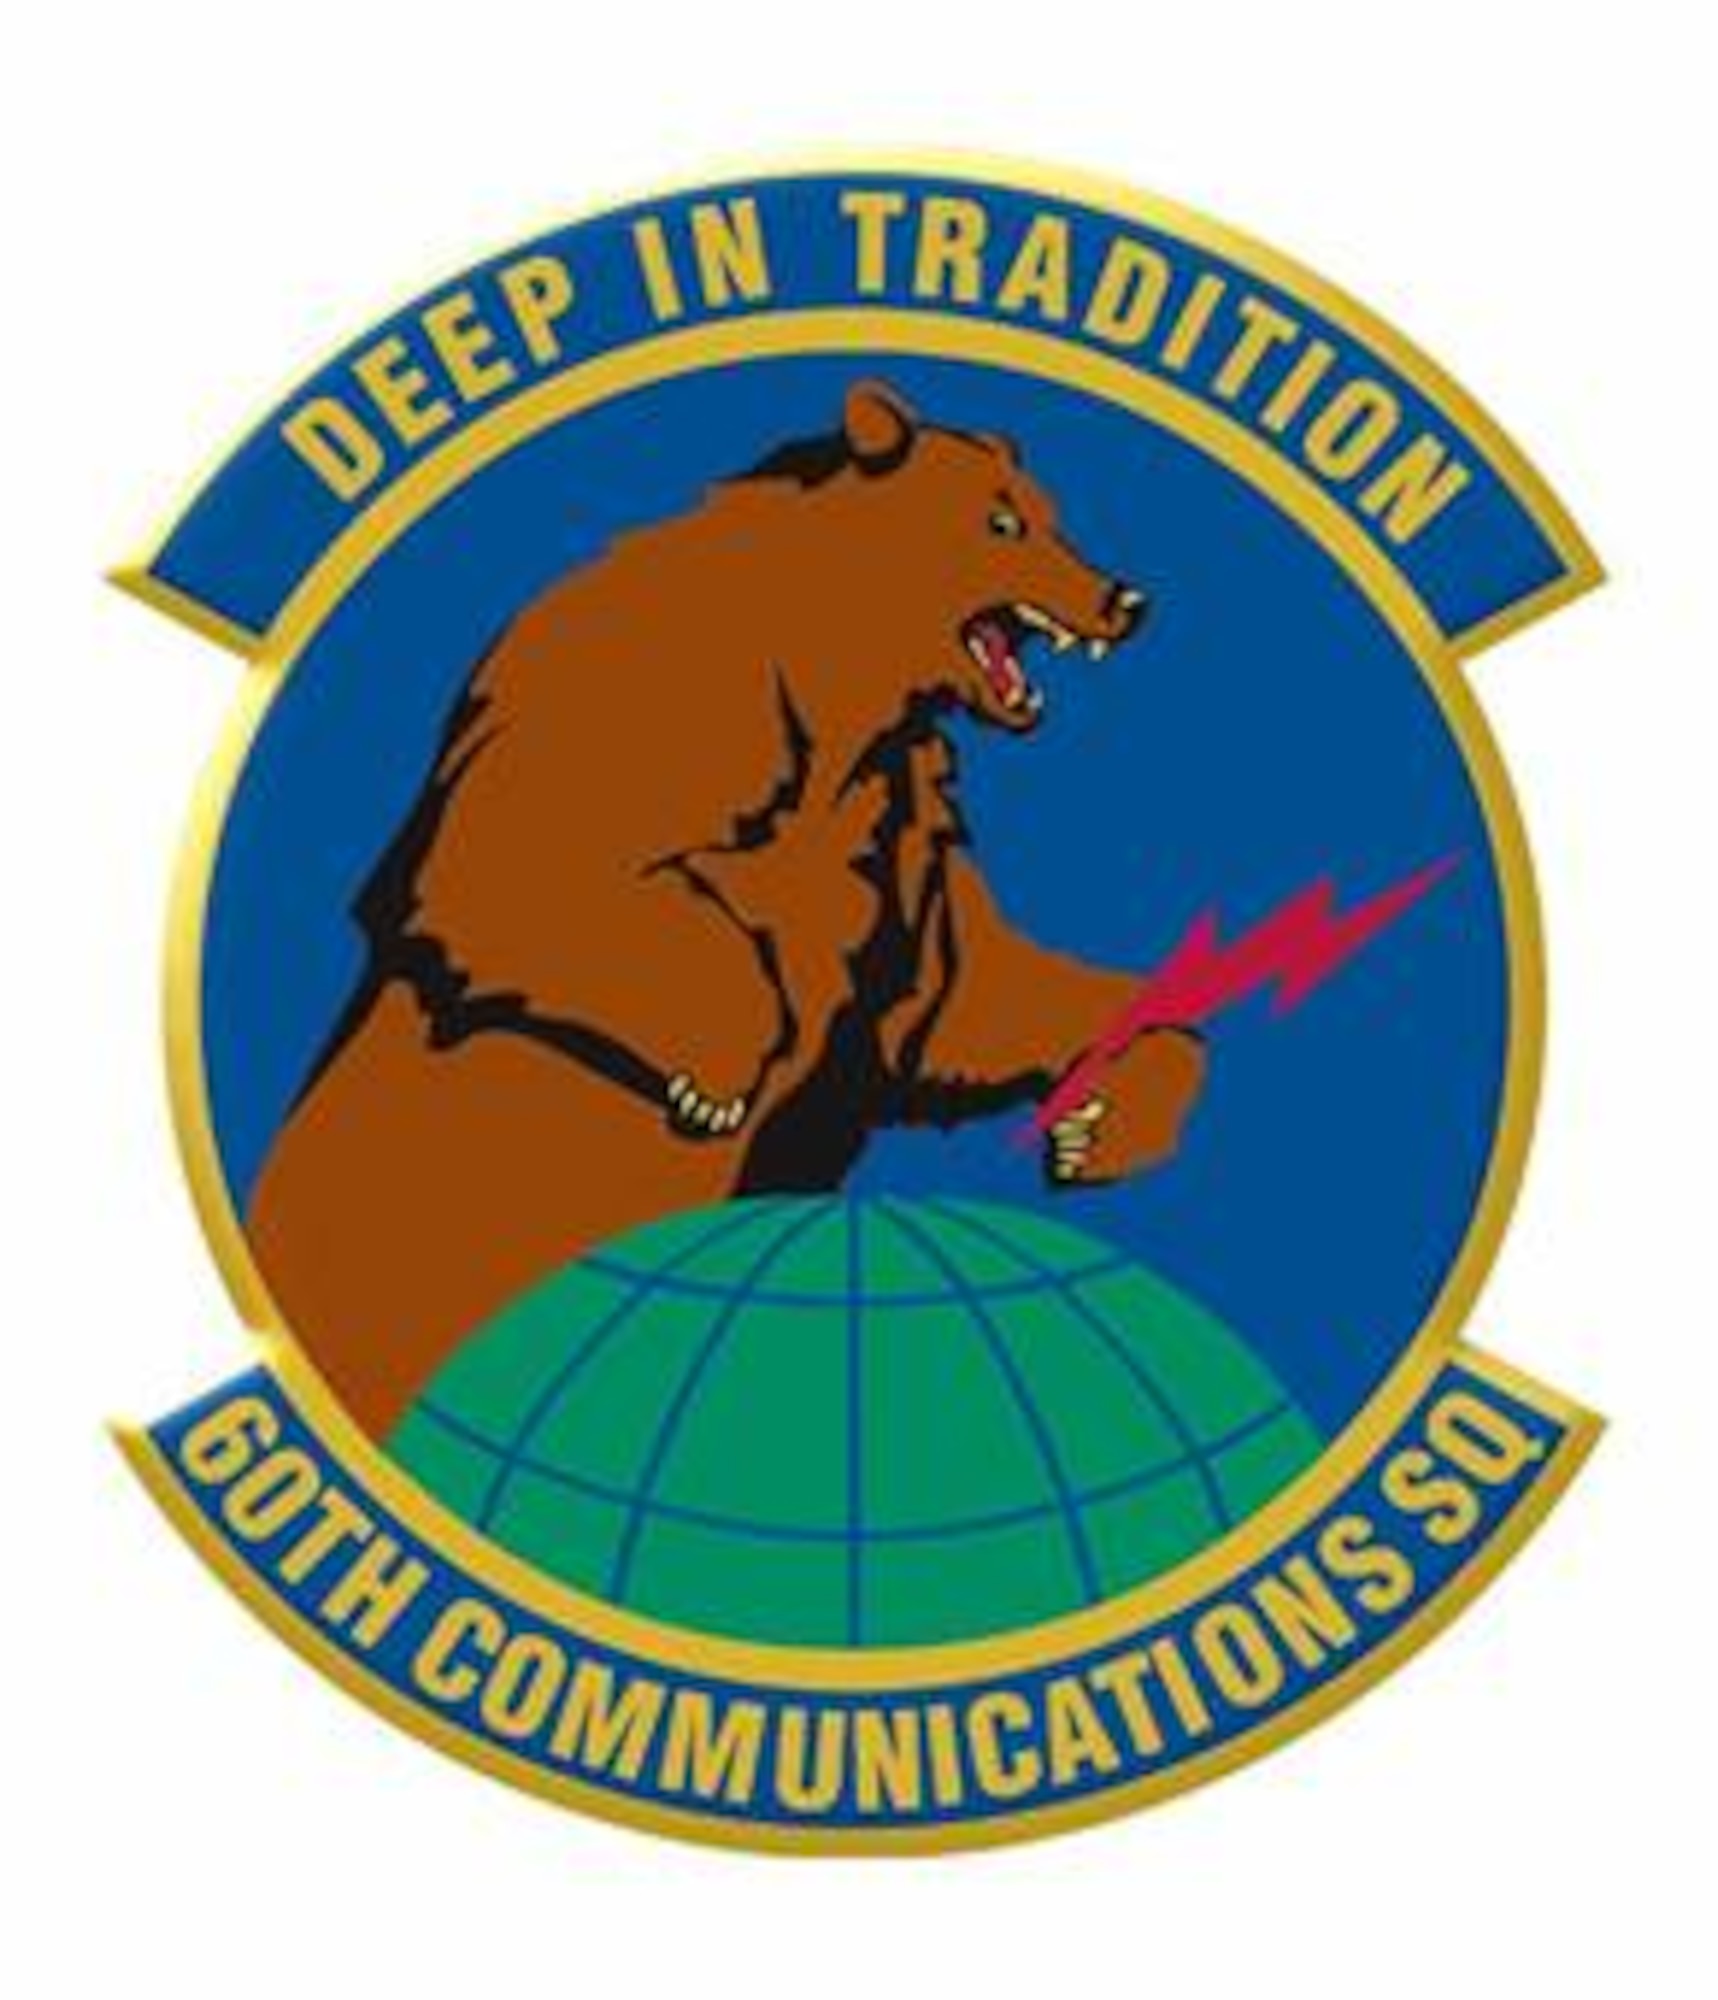 60th Communications Squadron